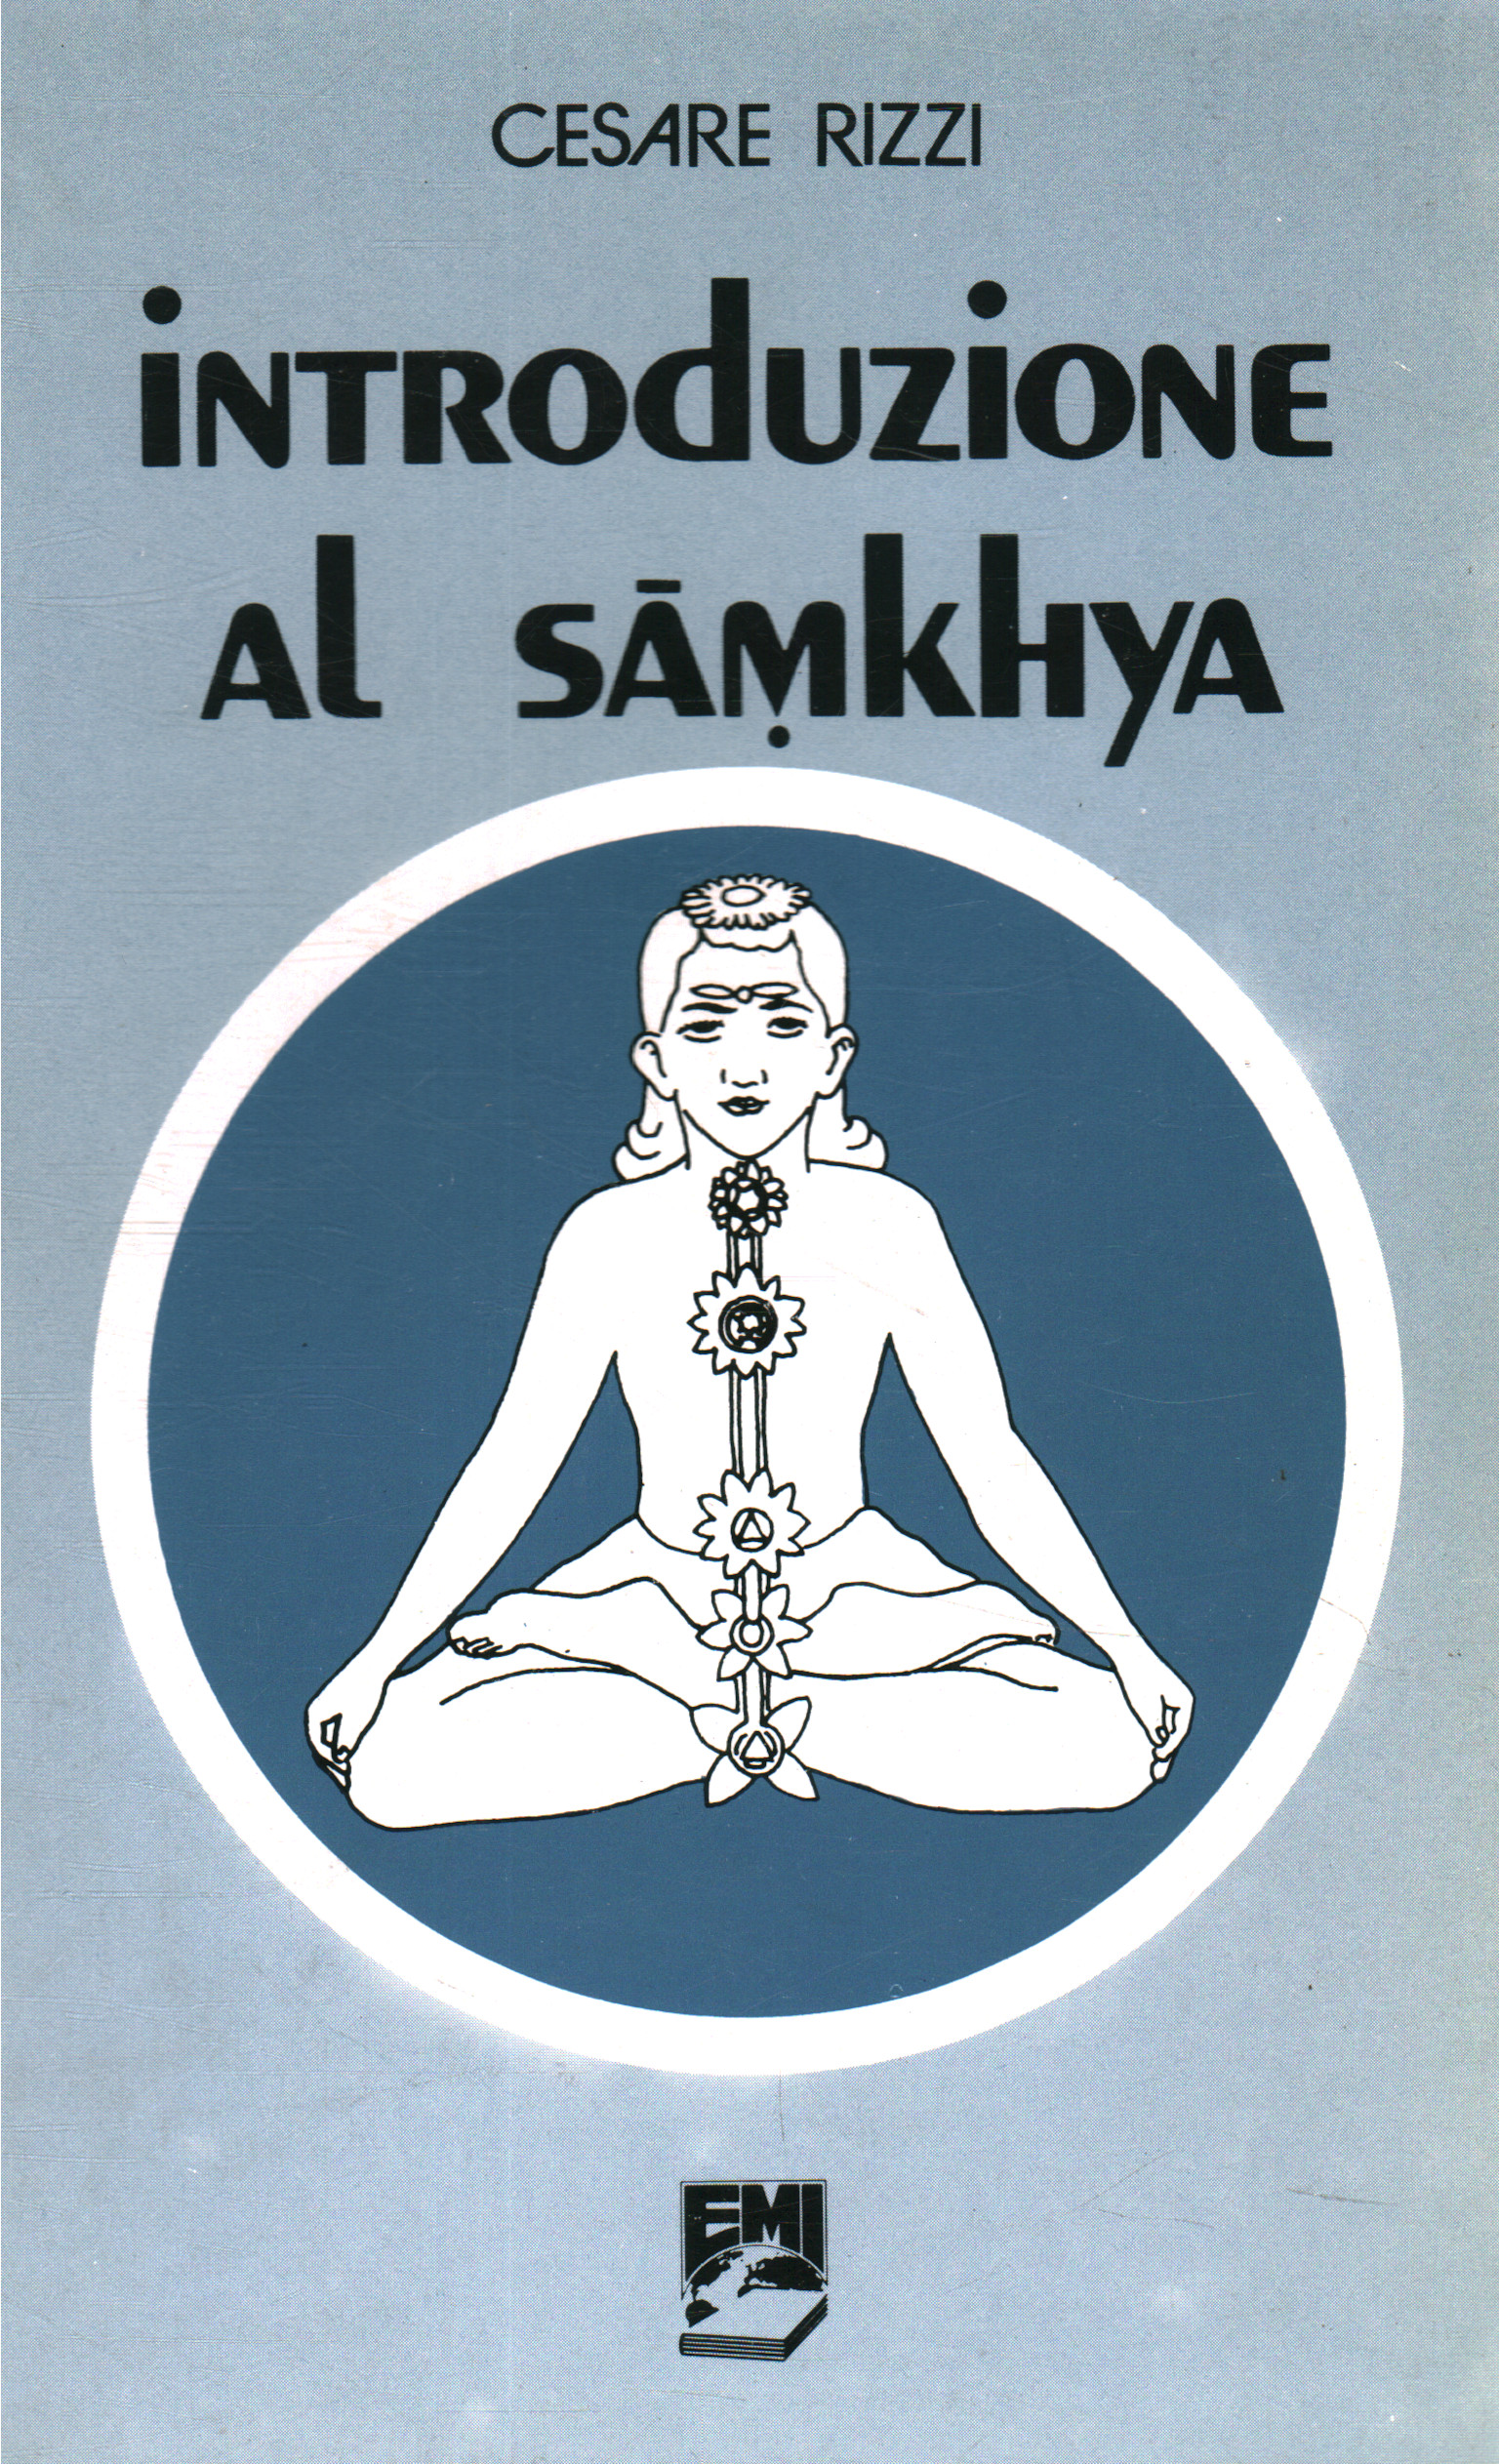 Introduction to Samkhya